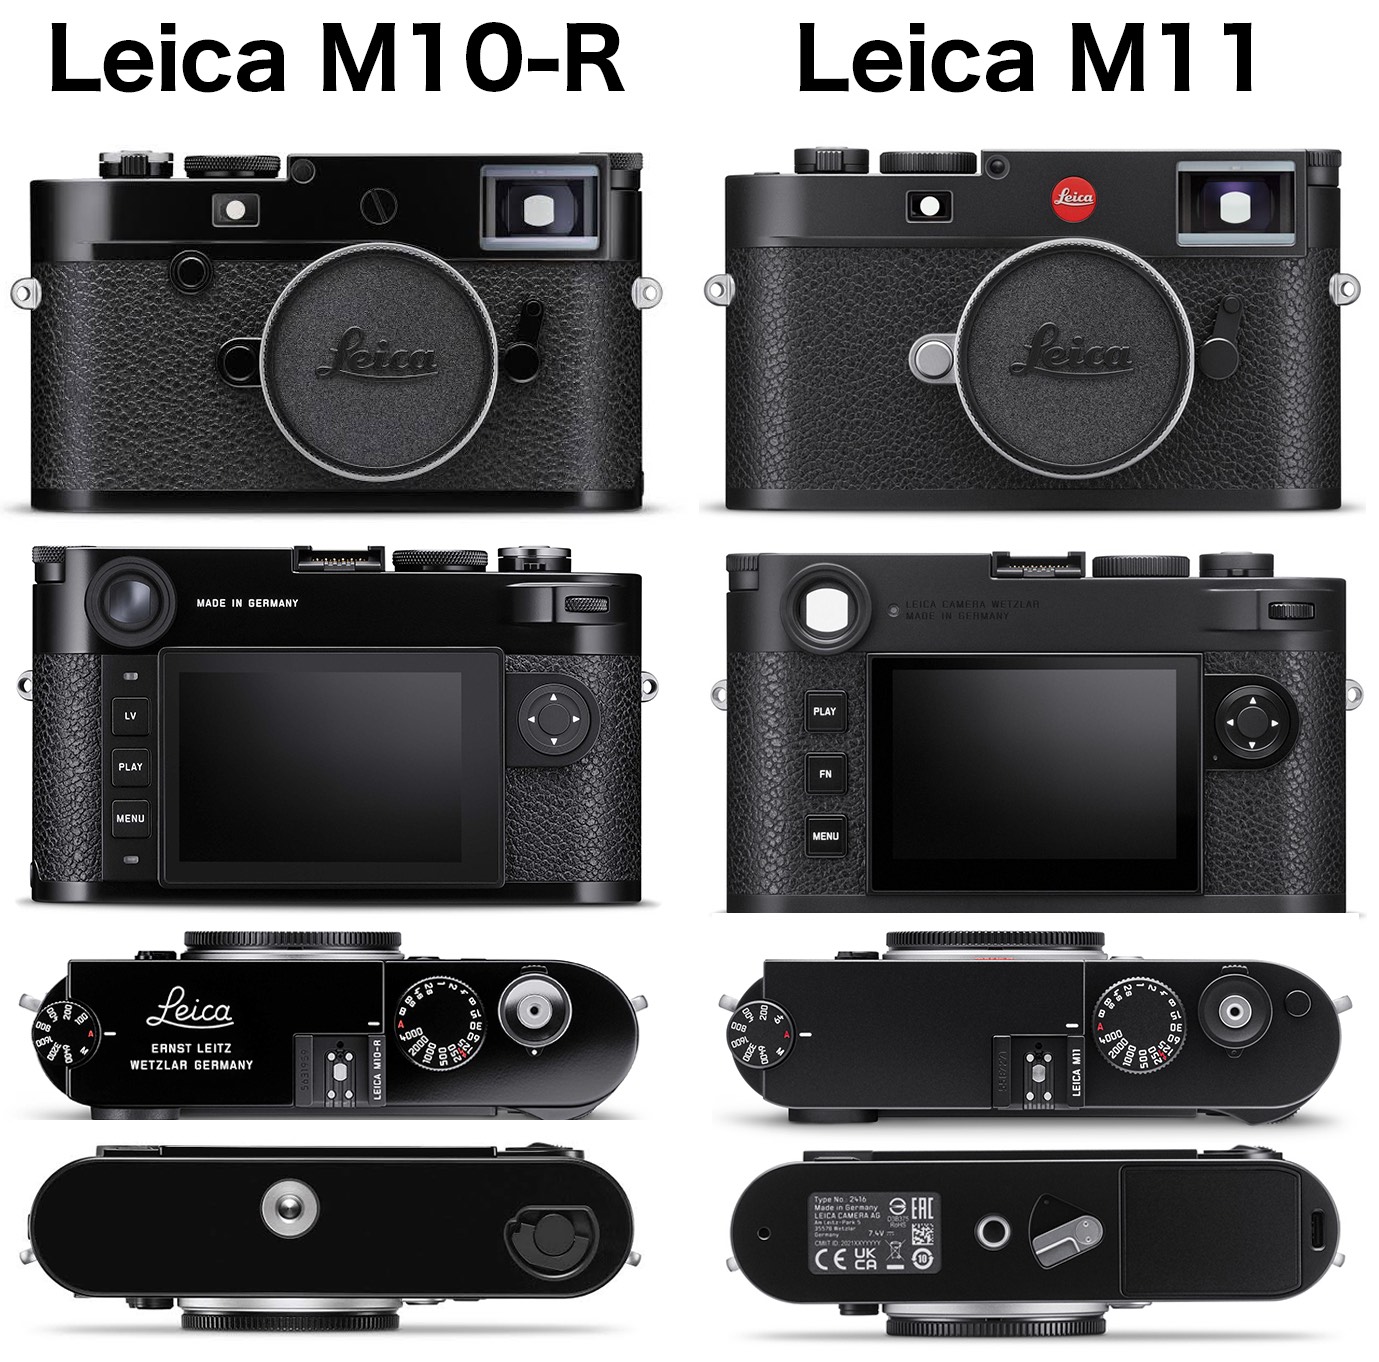 Leica-M10-R-vs.-Leica-M11-specifications-comparison-1-copy.jpg